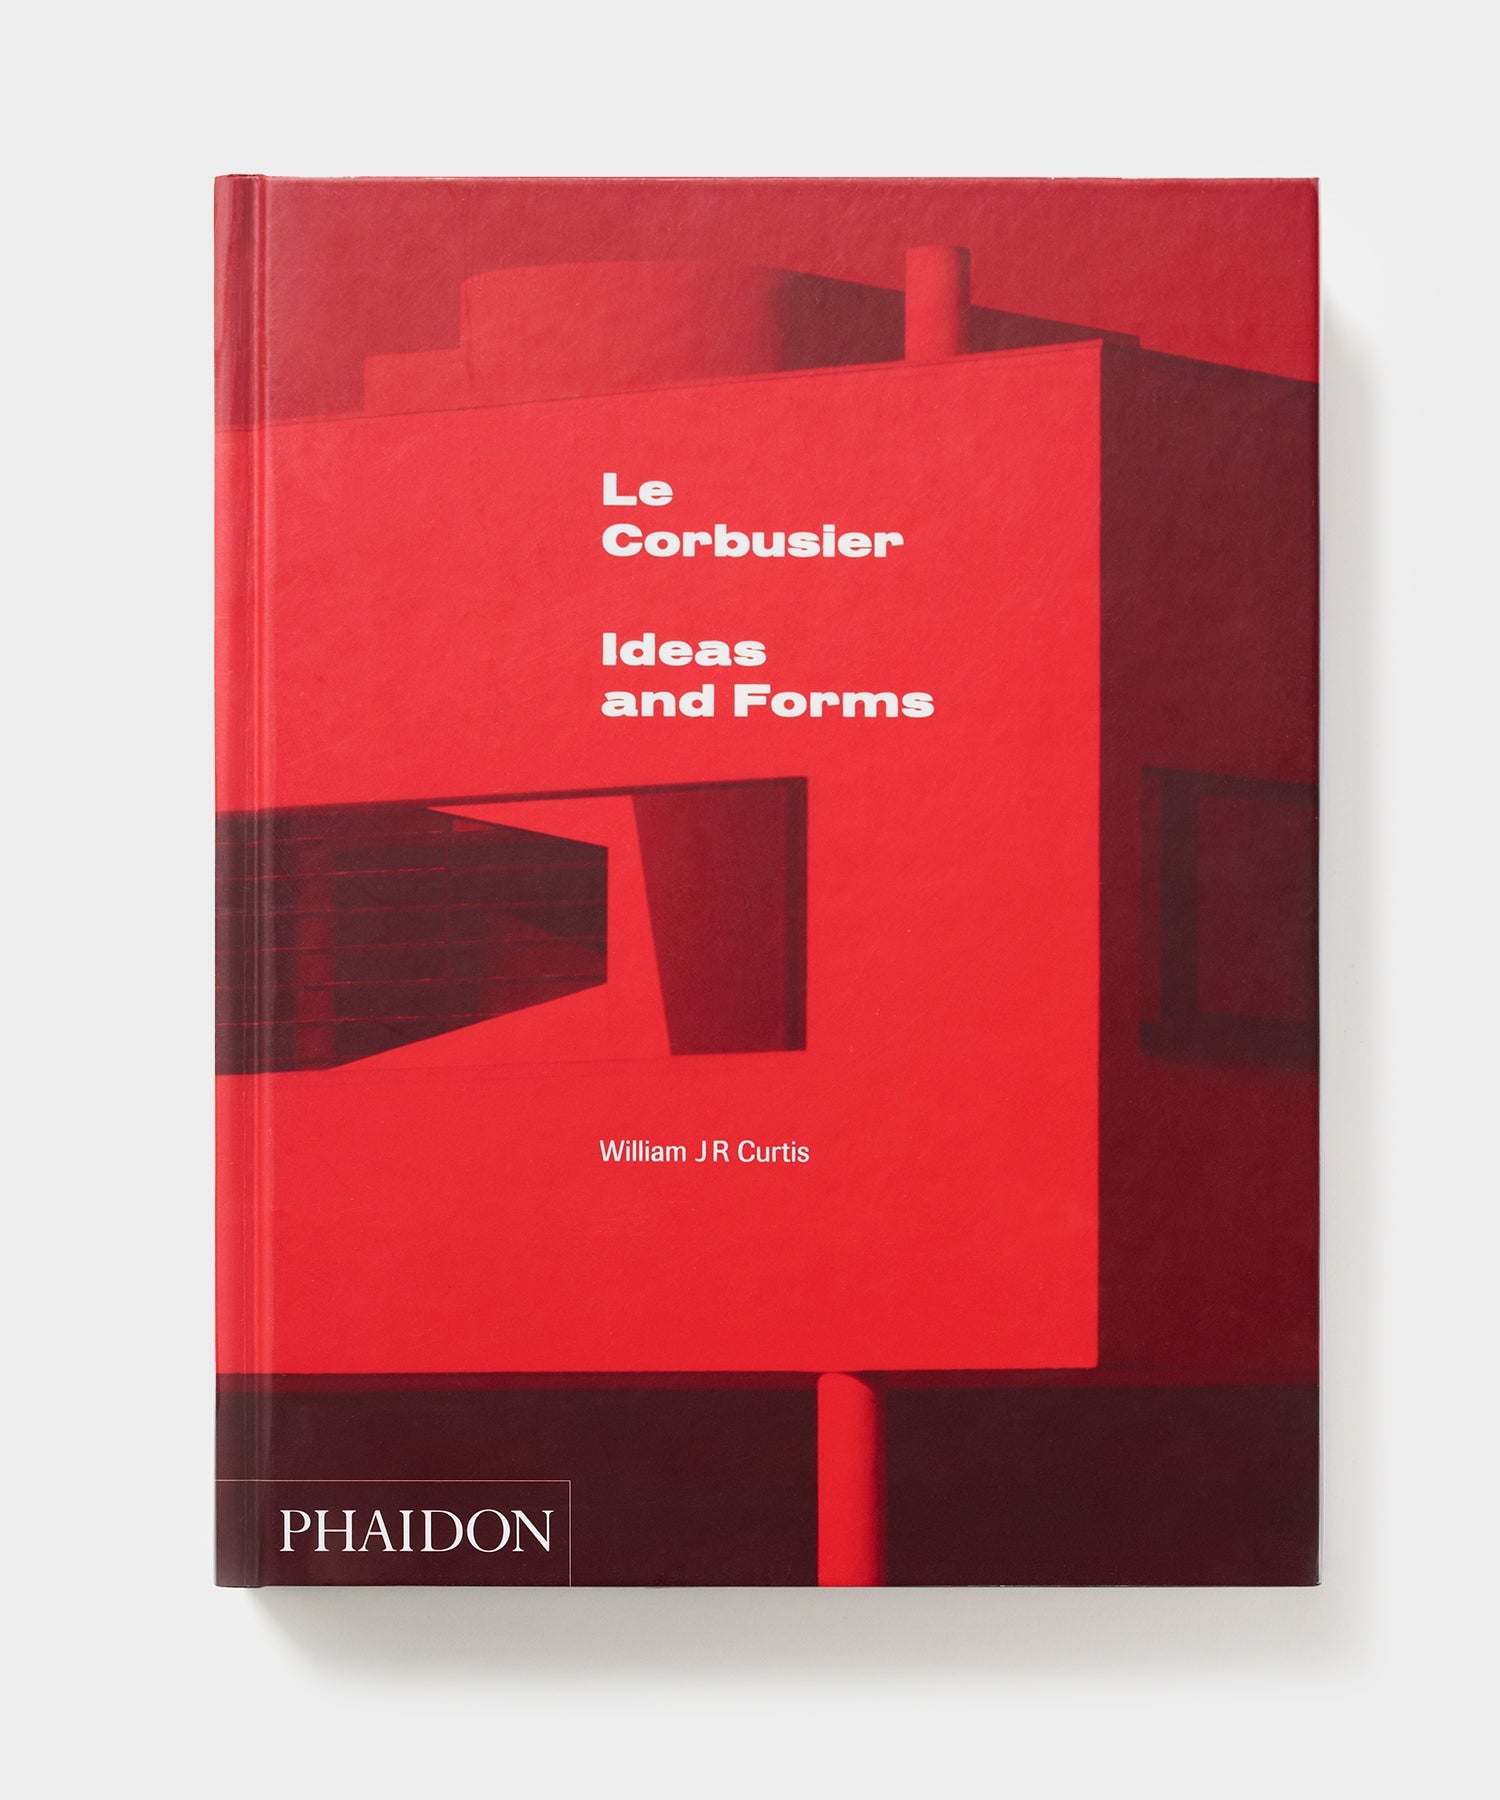 Phaidon " Le Corbusier: Ideas and Forms "